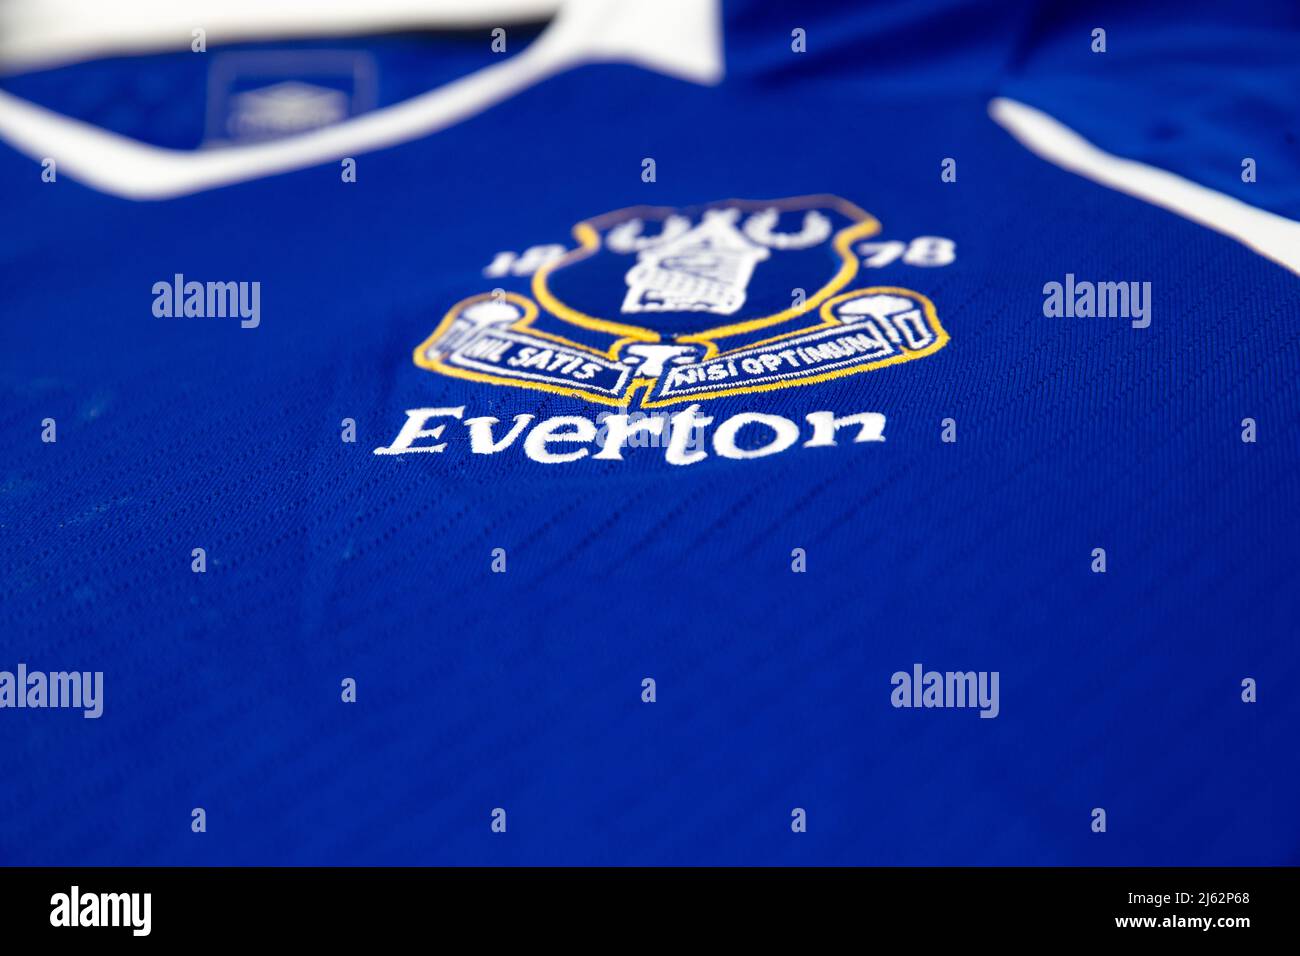 Everton badge on a football shirt Stock Photo